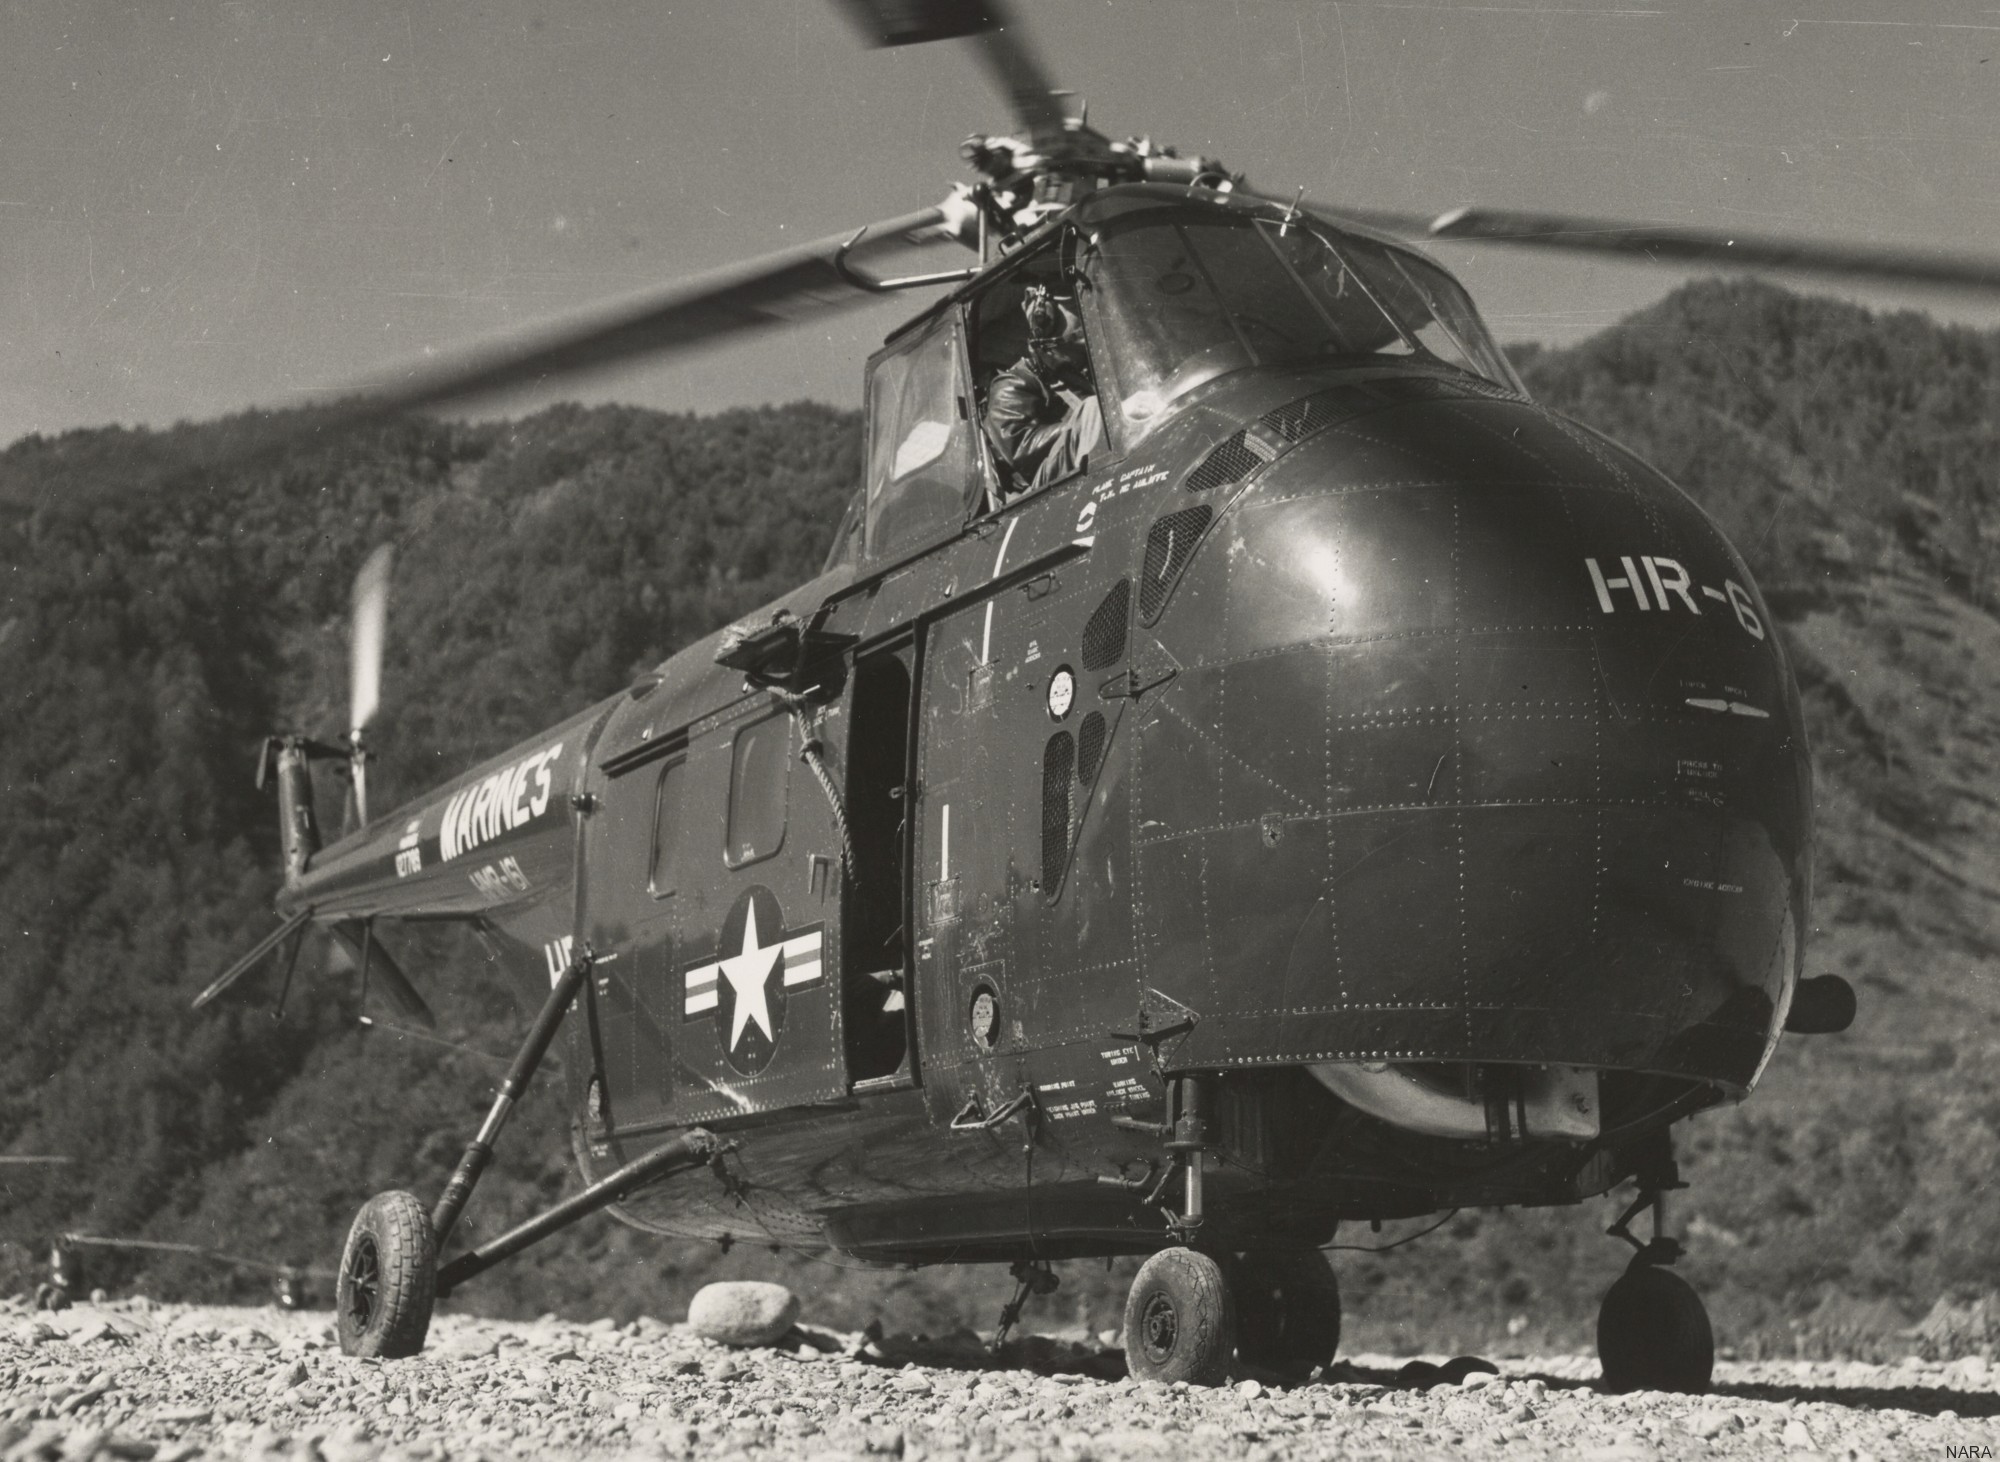 hmr-161 greyhawks marine helicopter transport squadron sikorsky hrs-1 usmc 23